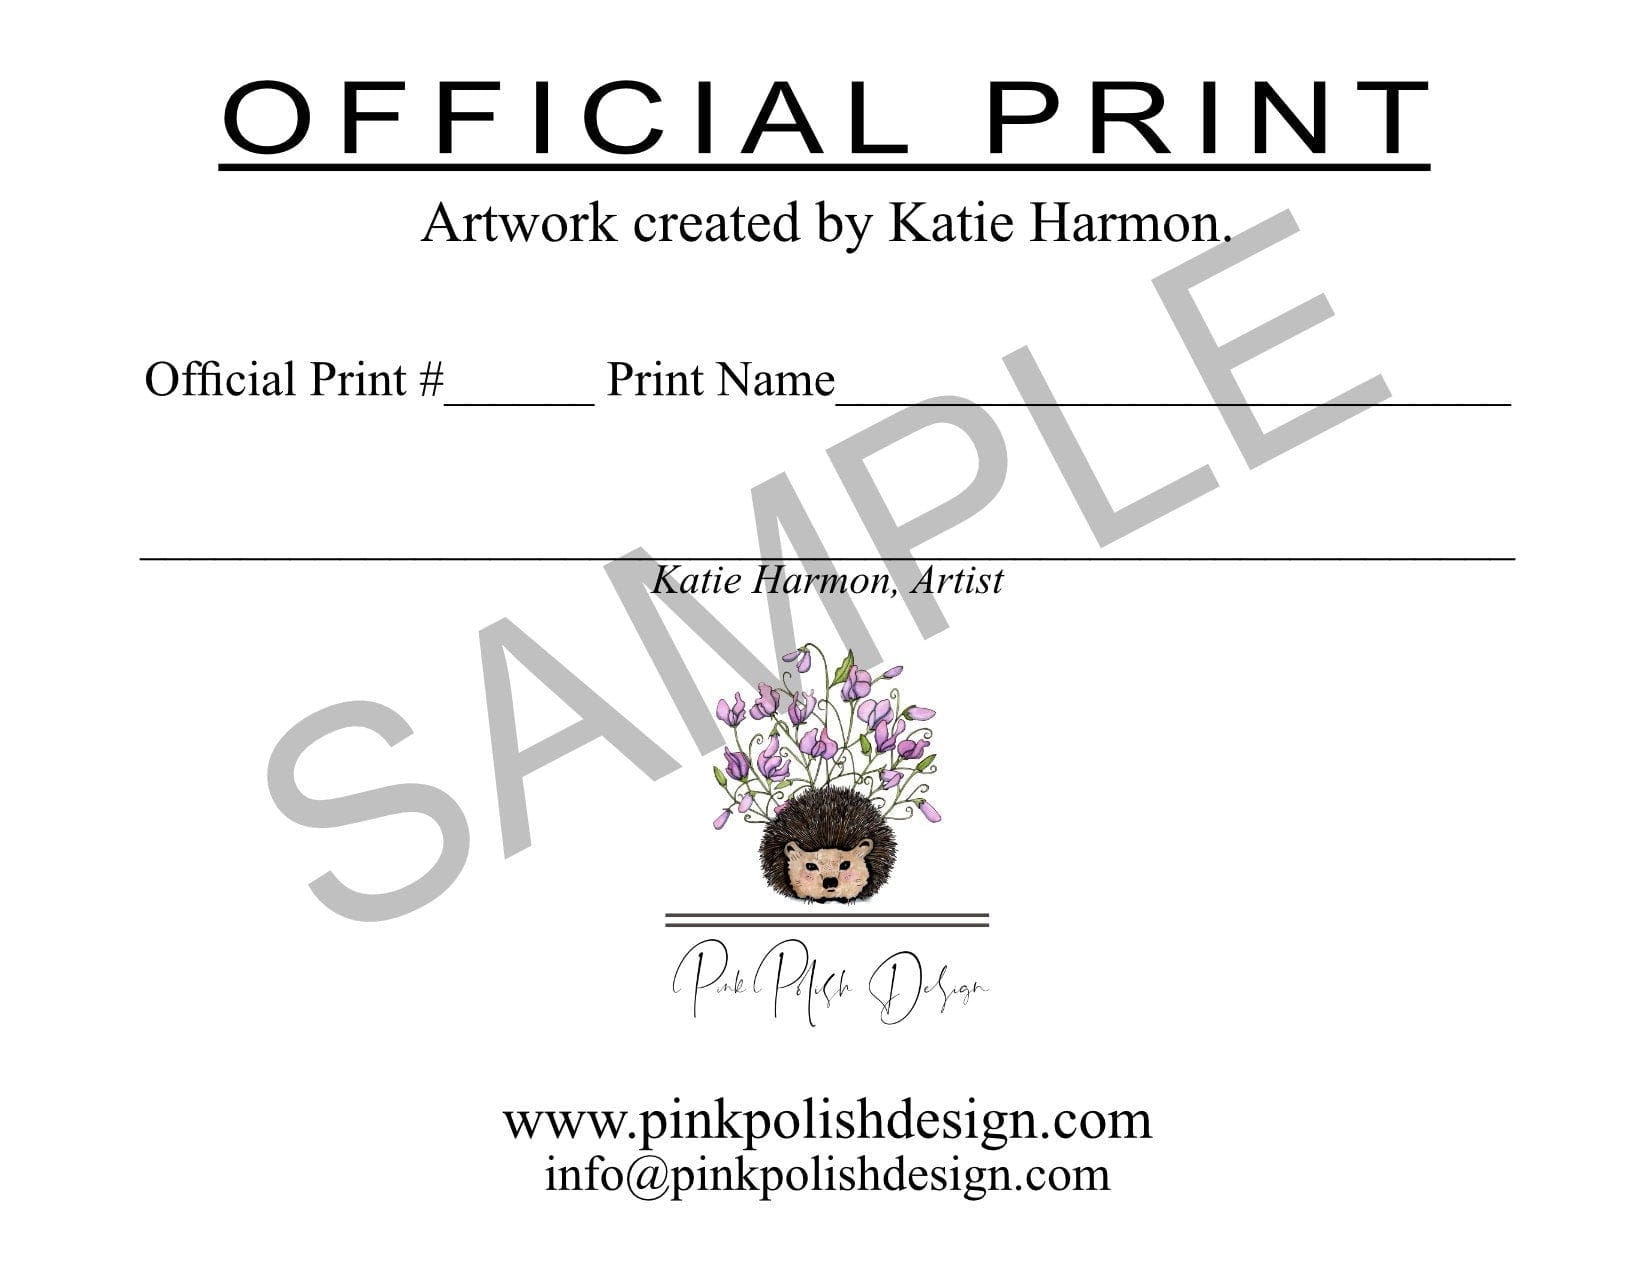 PinkPolish Design Posters, Prints, & Visual Artwork "Anxiety" Digital Ink Drawing: Art Print